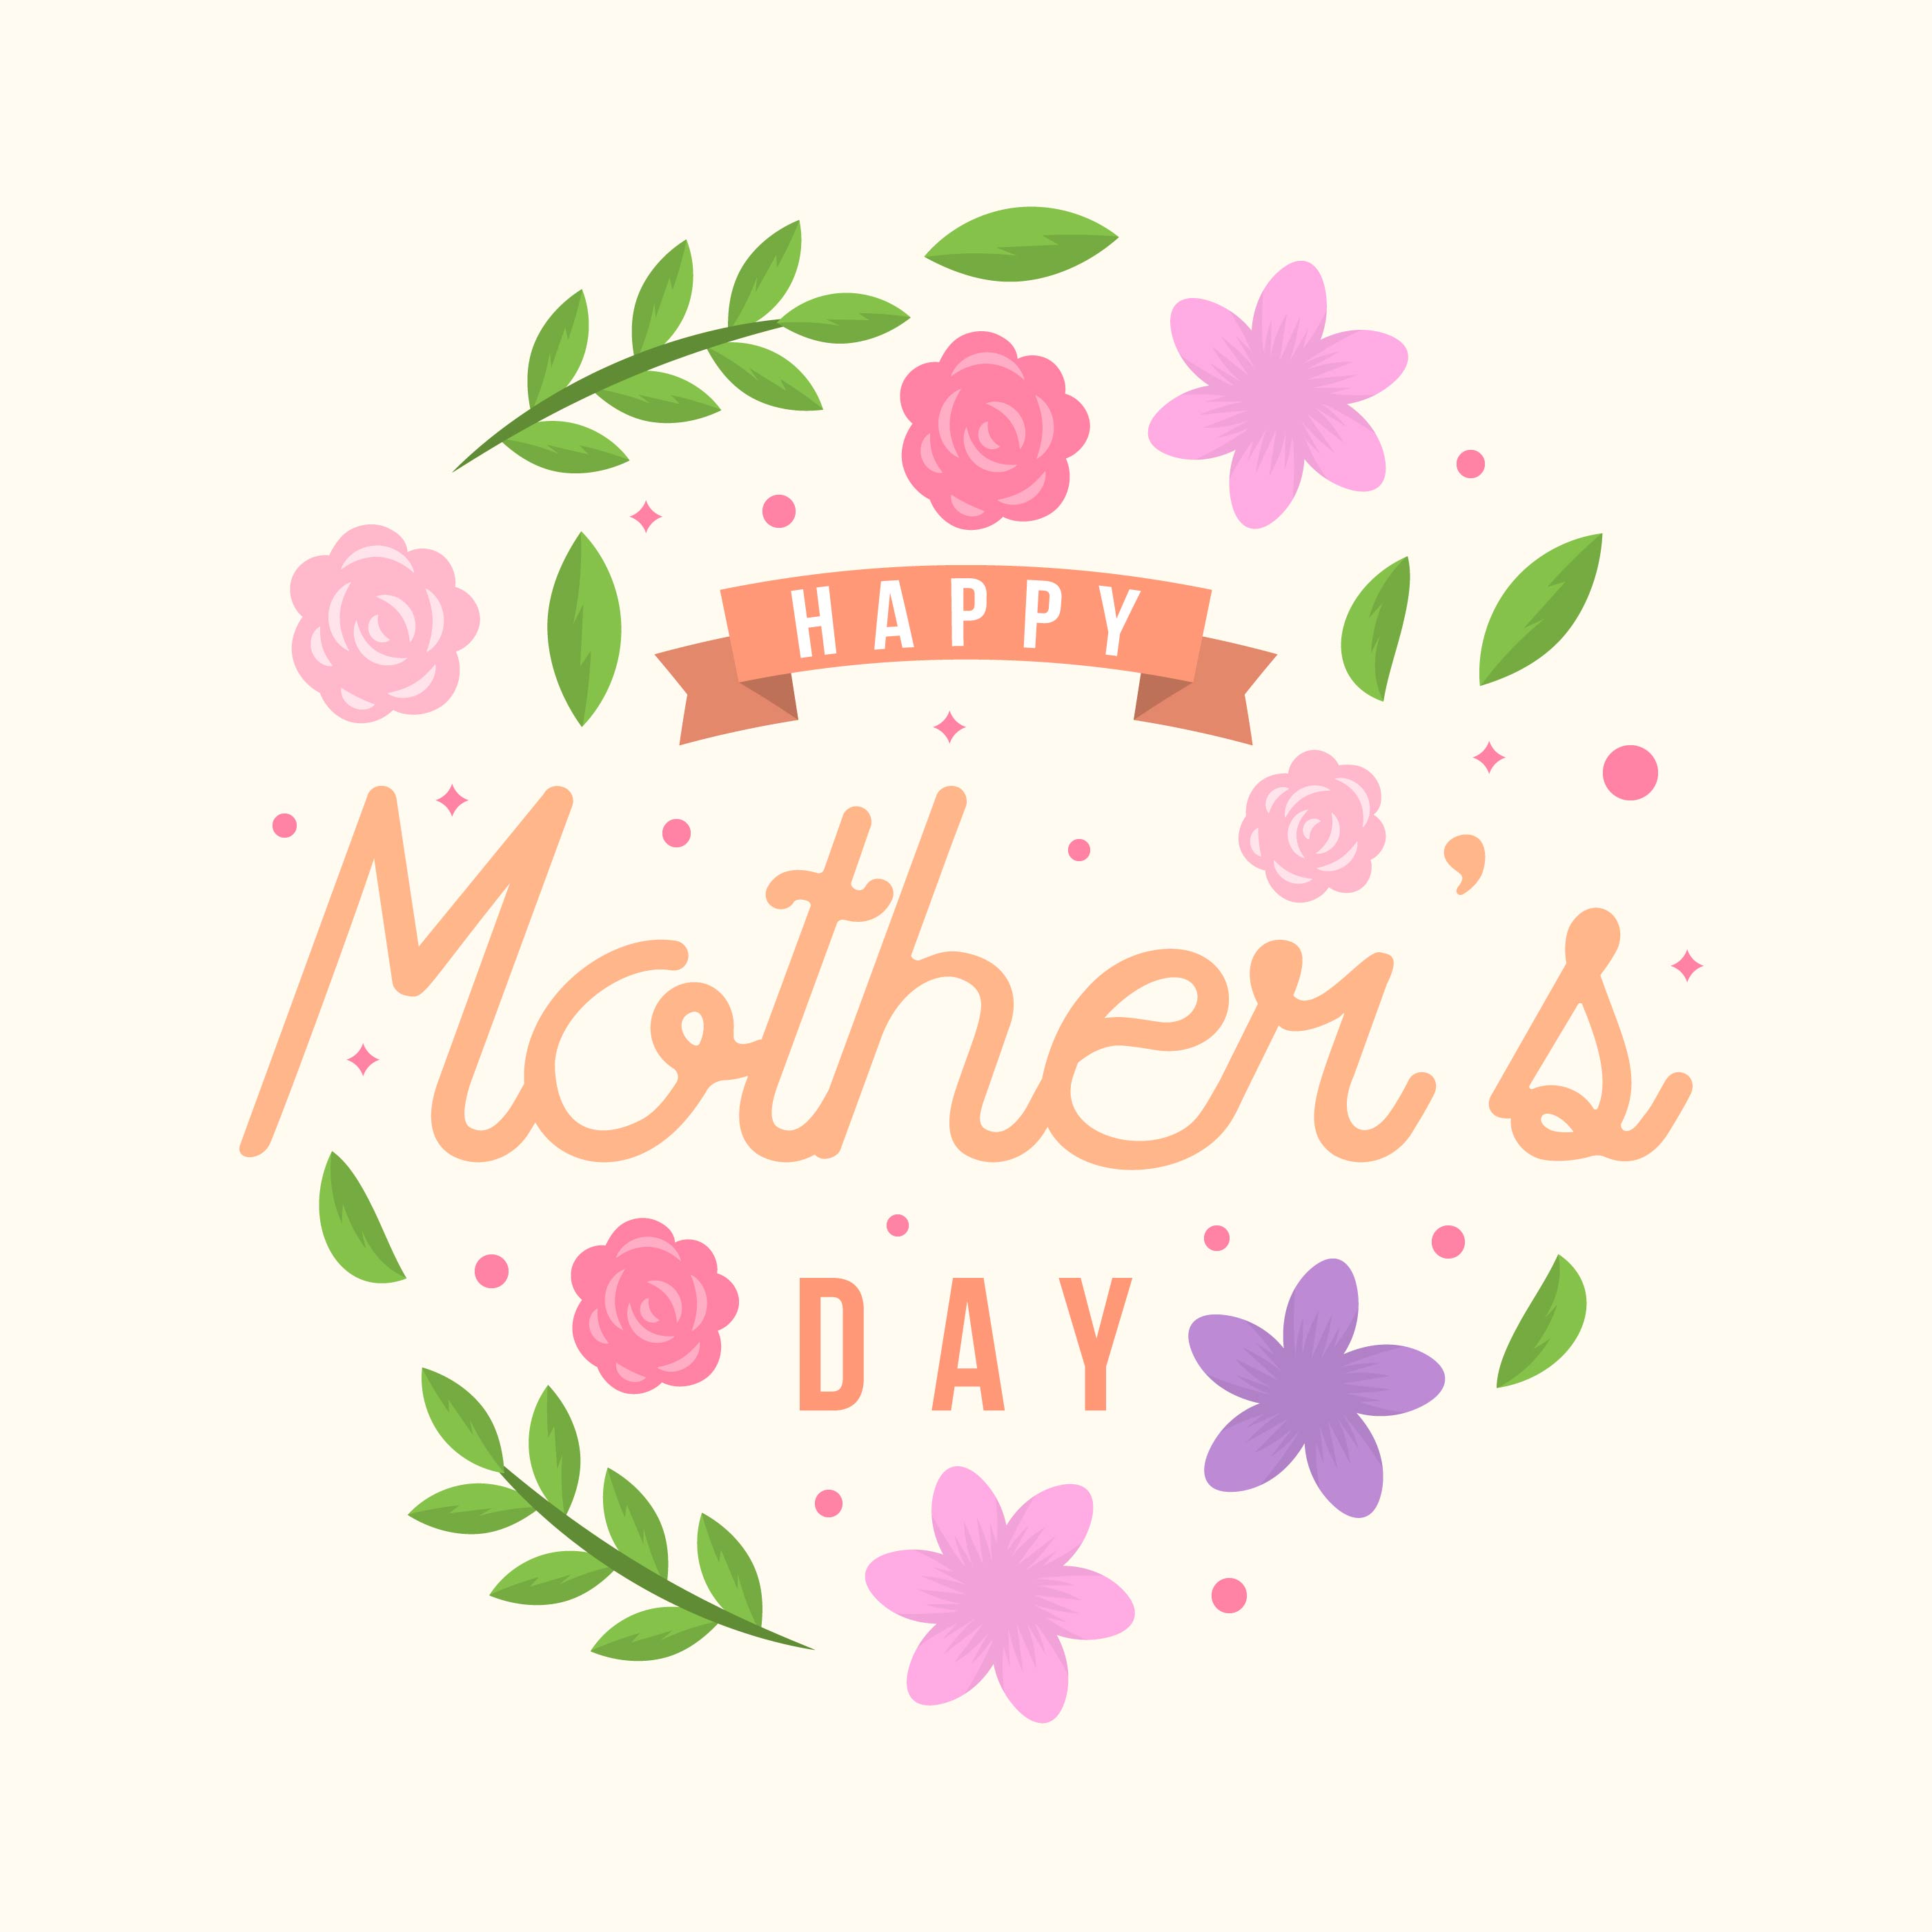 Happy Mother's Day Design SVG File Free Fonts Popular Downloads for